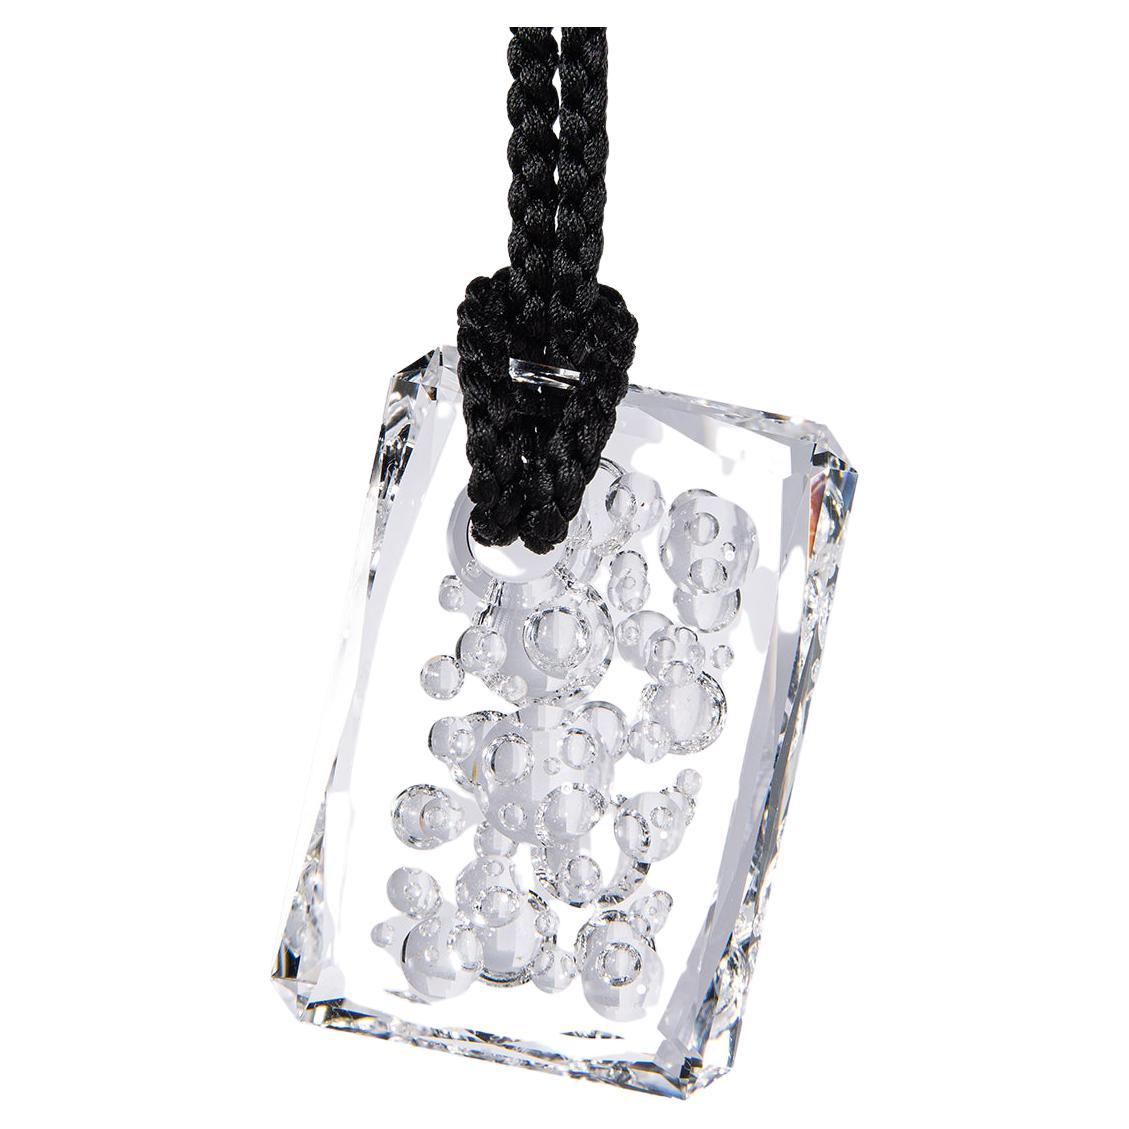 Talisman II Carved Rock Crystal Pendant Unique Amulet pendant healing gemstone For Sale